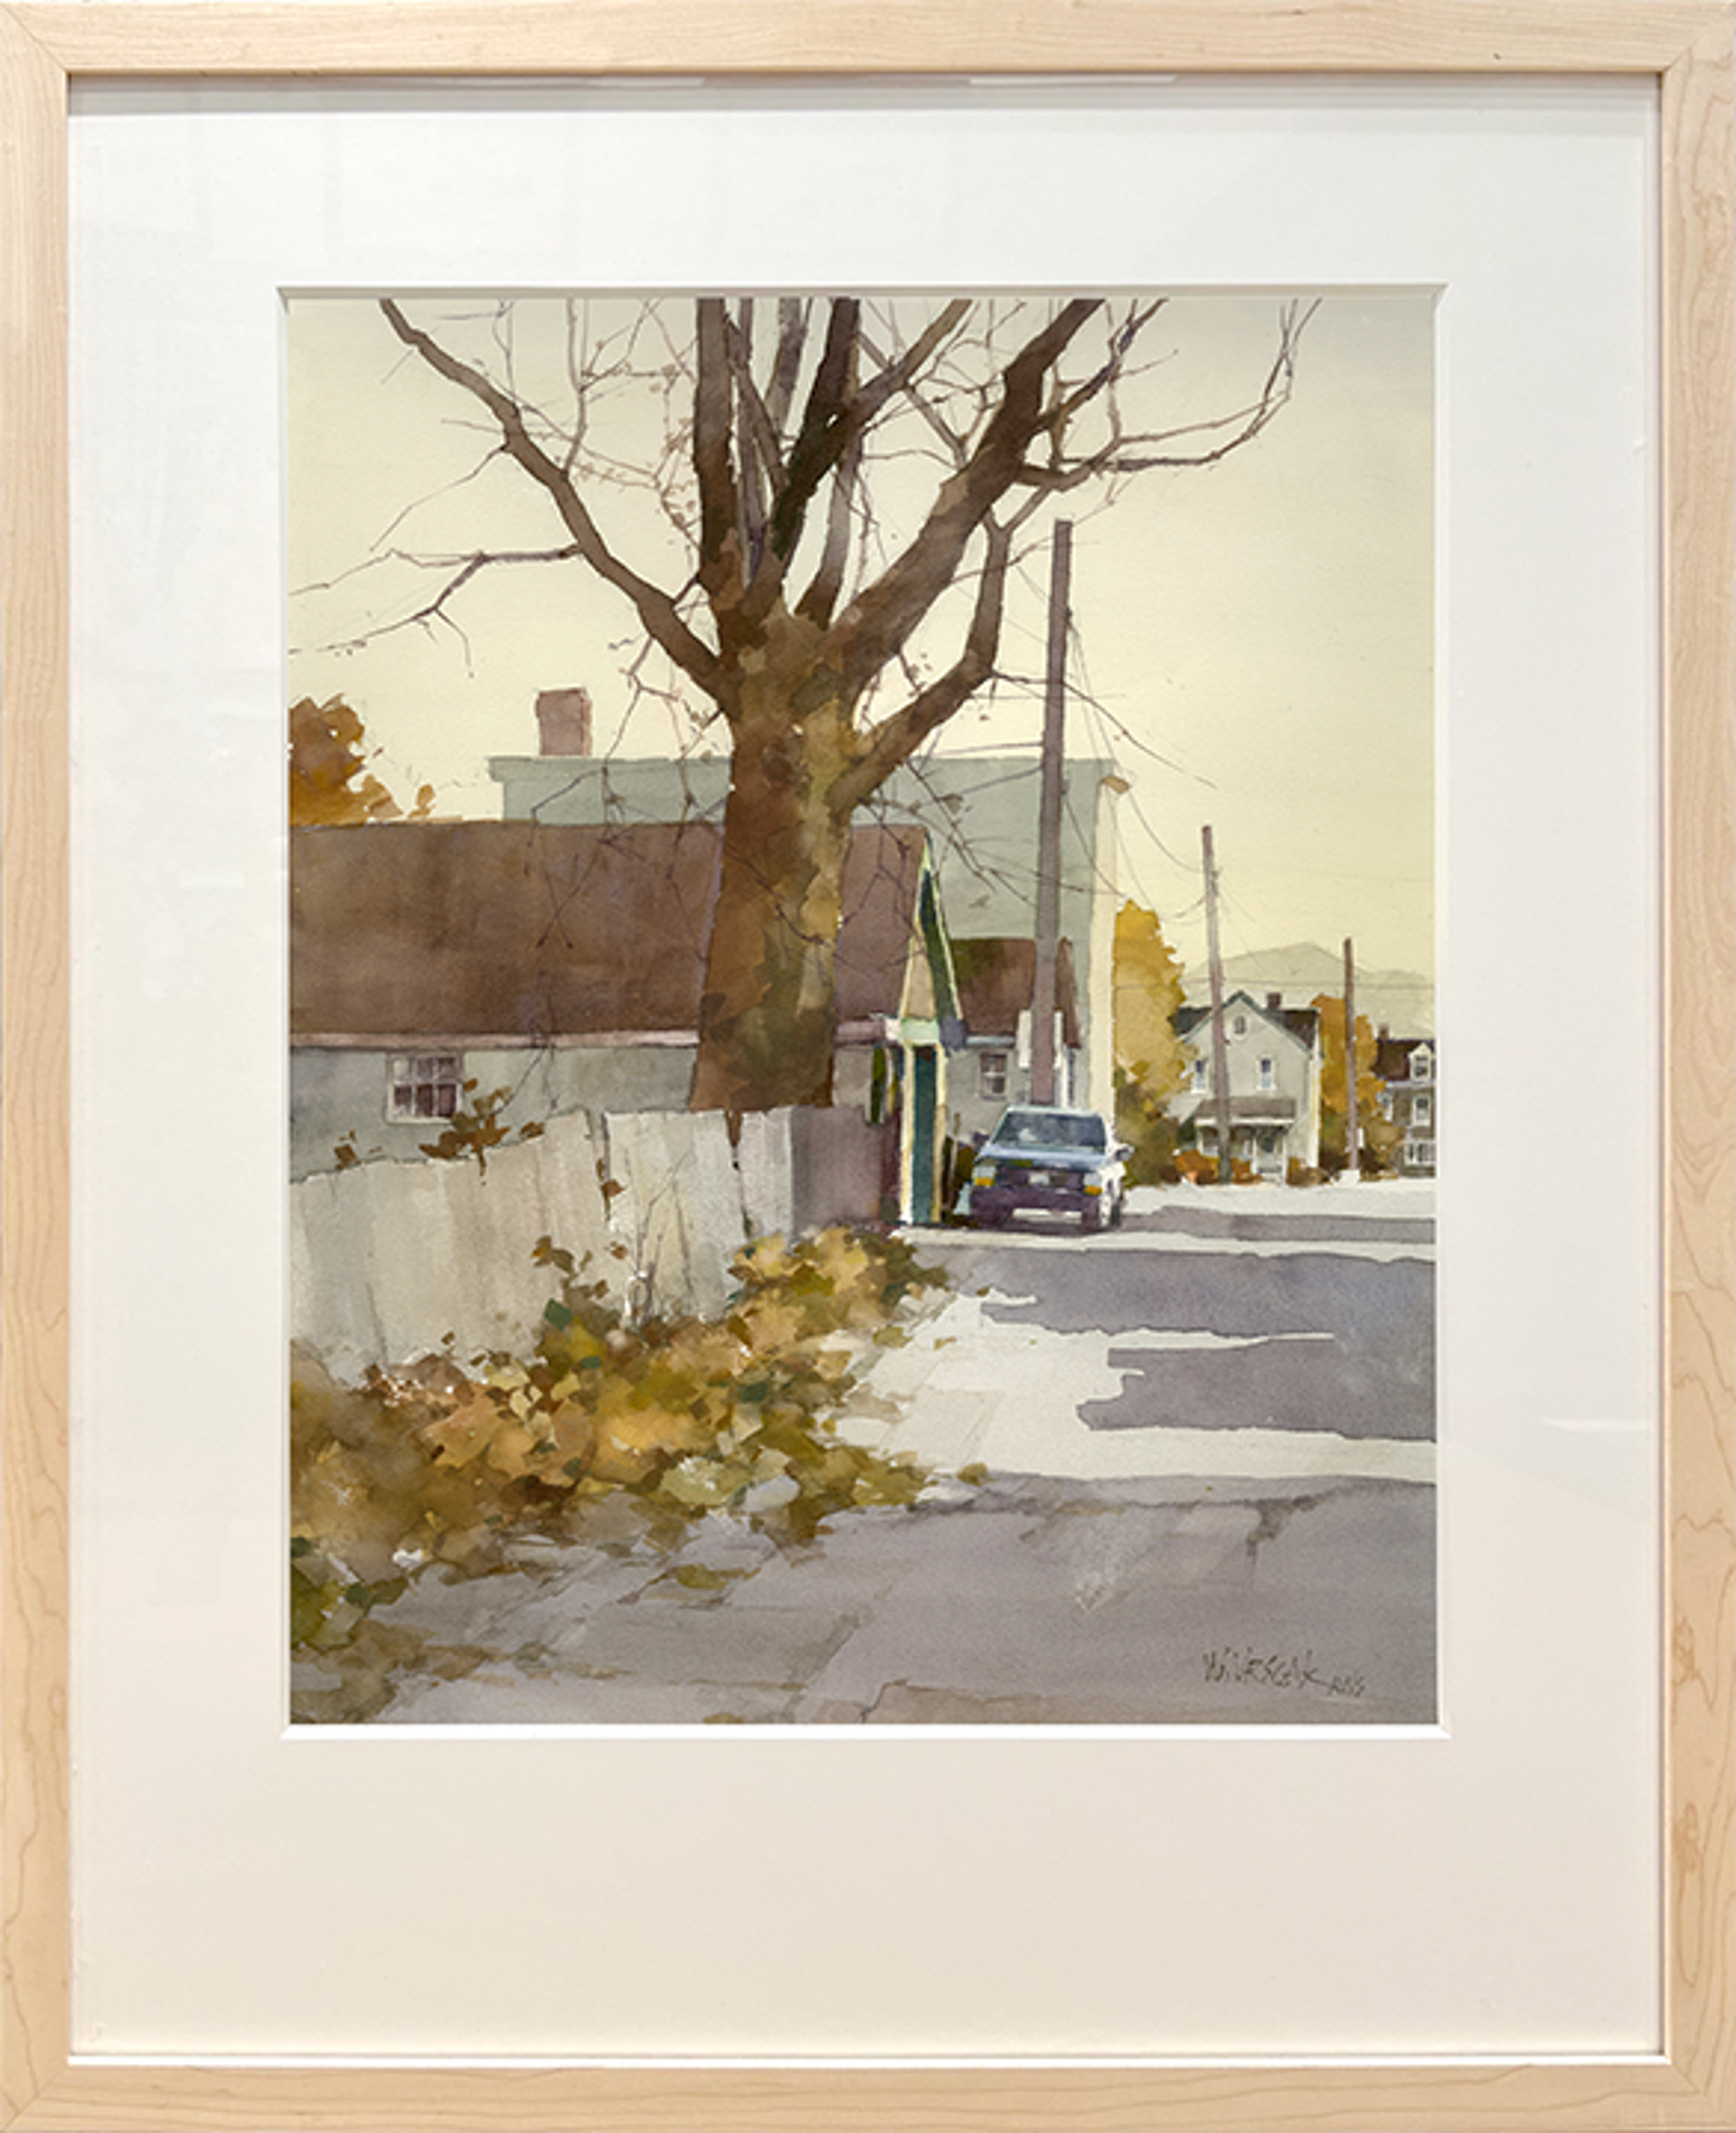 October Alley by William Vrscak